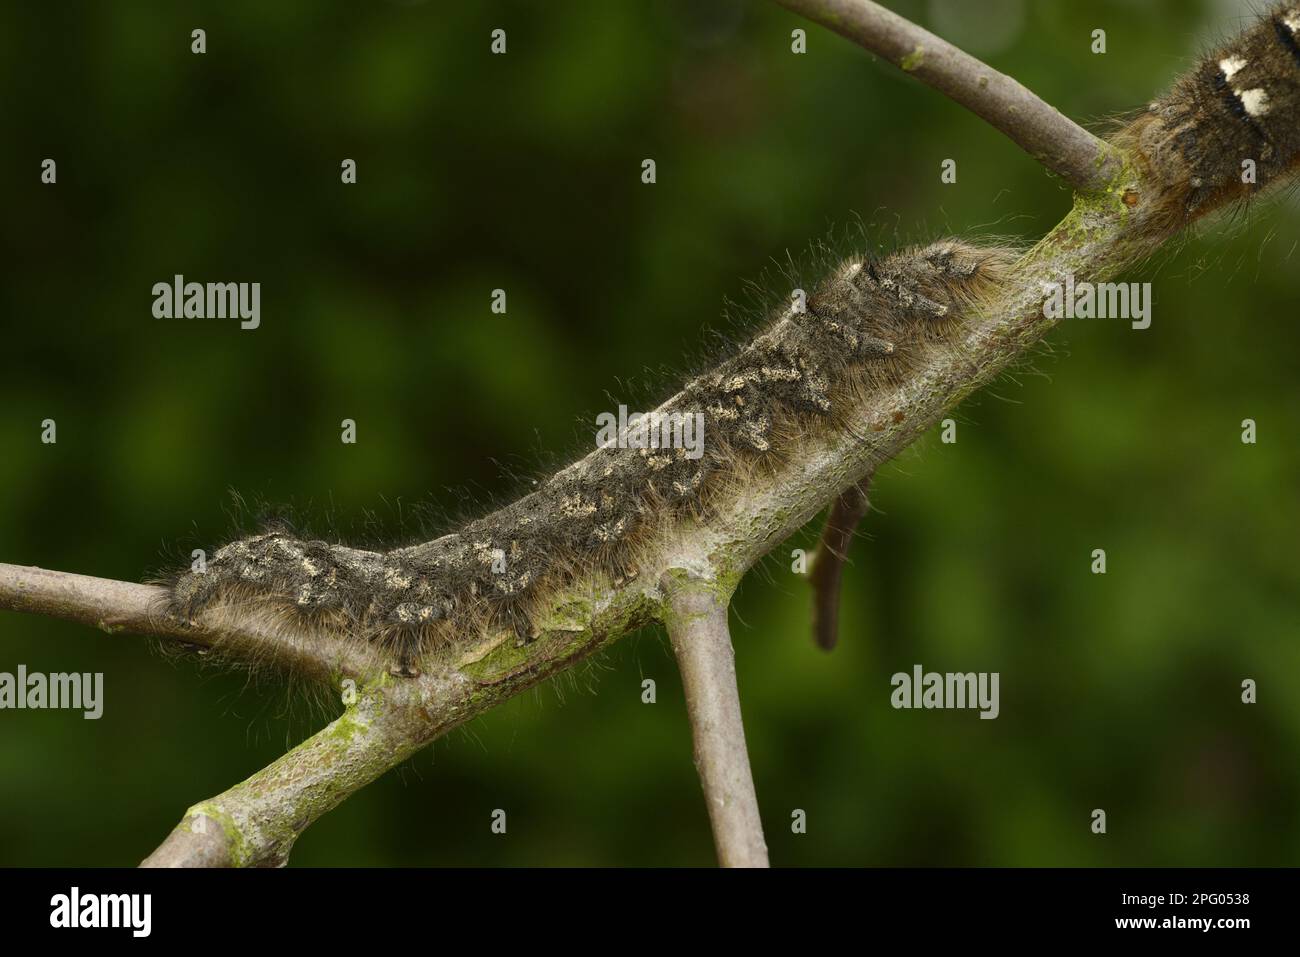 Lappet (Gastropacha quercifolia) Moth full grown larva, on hawthorn twig, Oxfordshire, England, United Kingdom Stock Photo